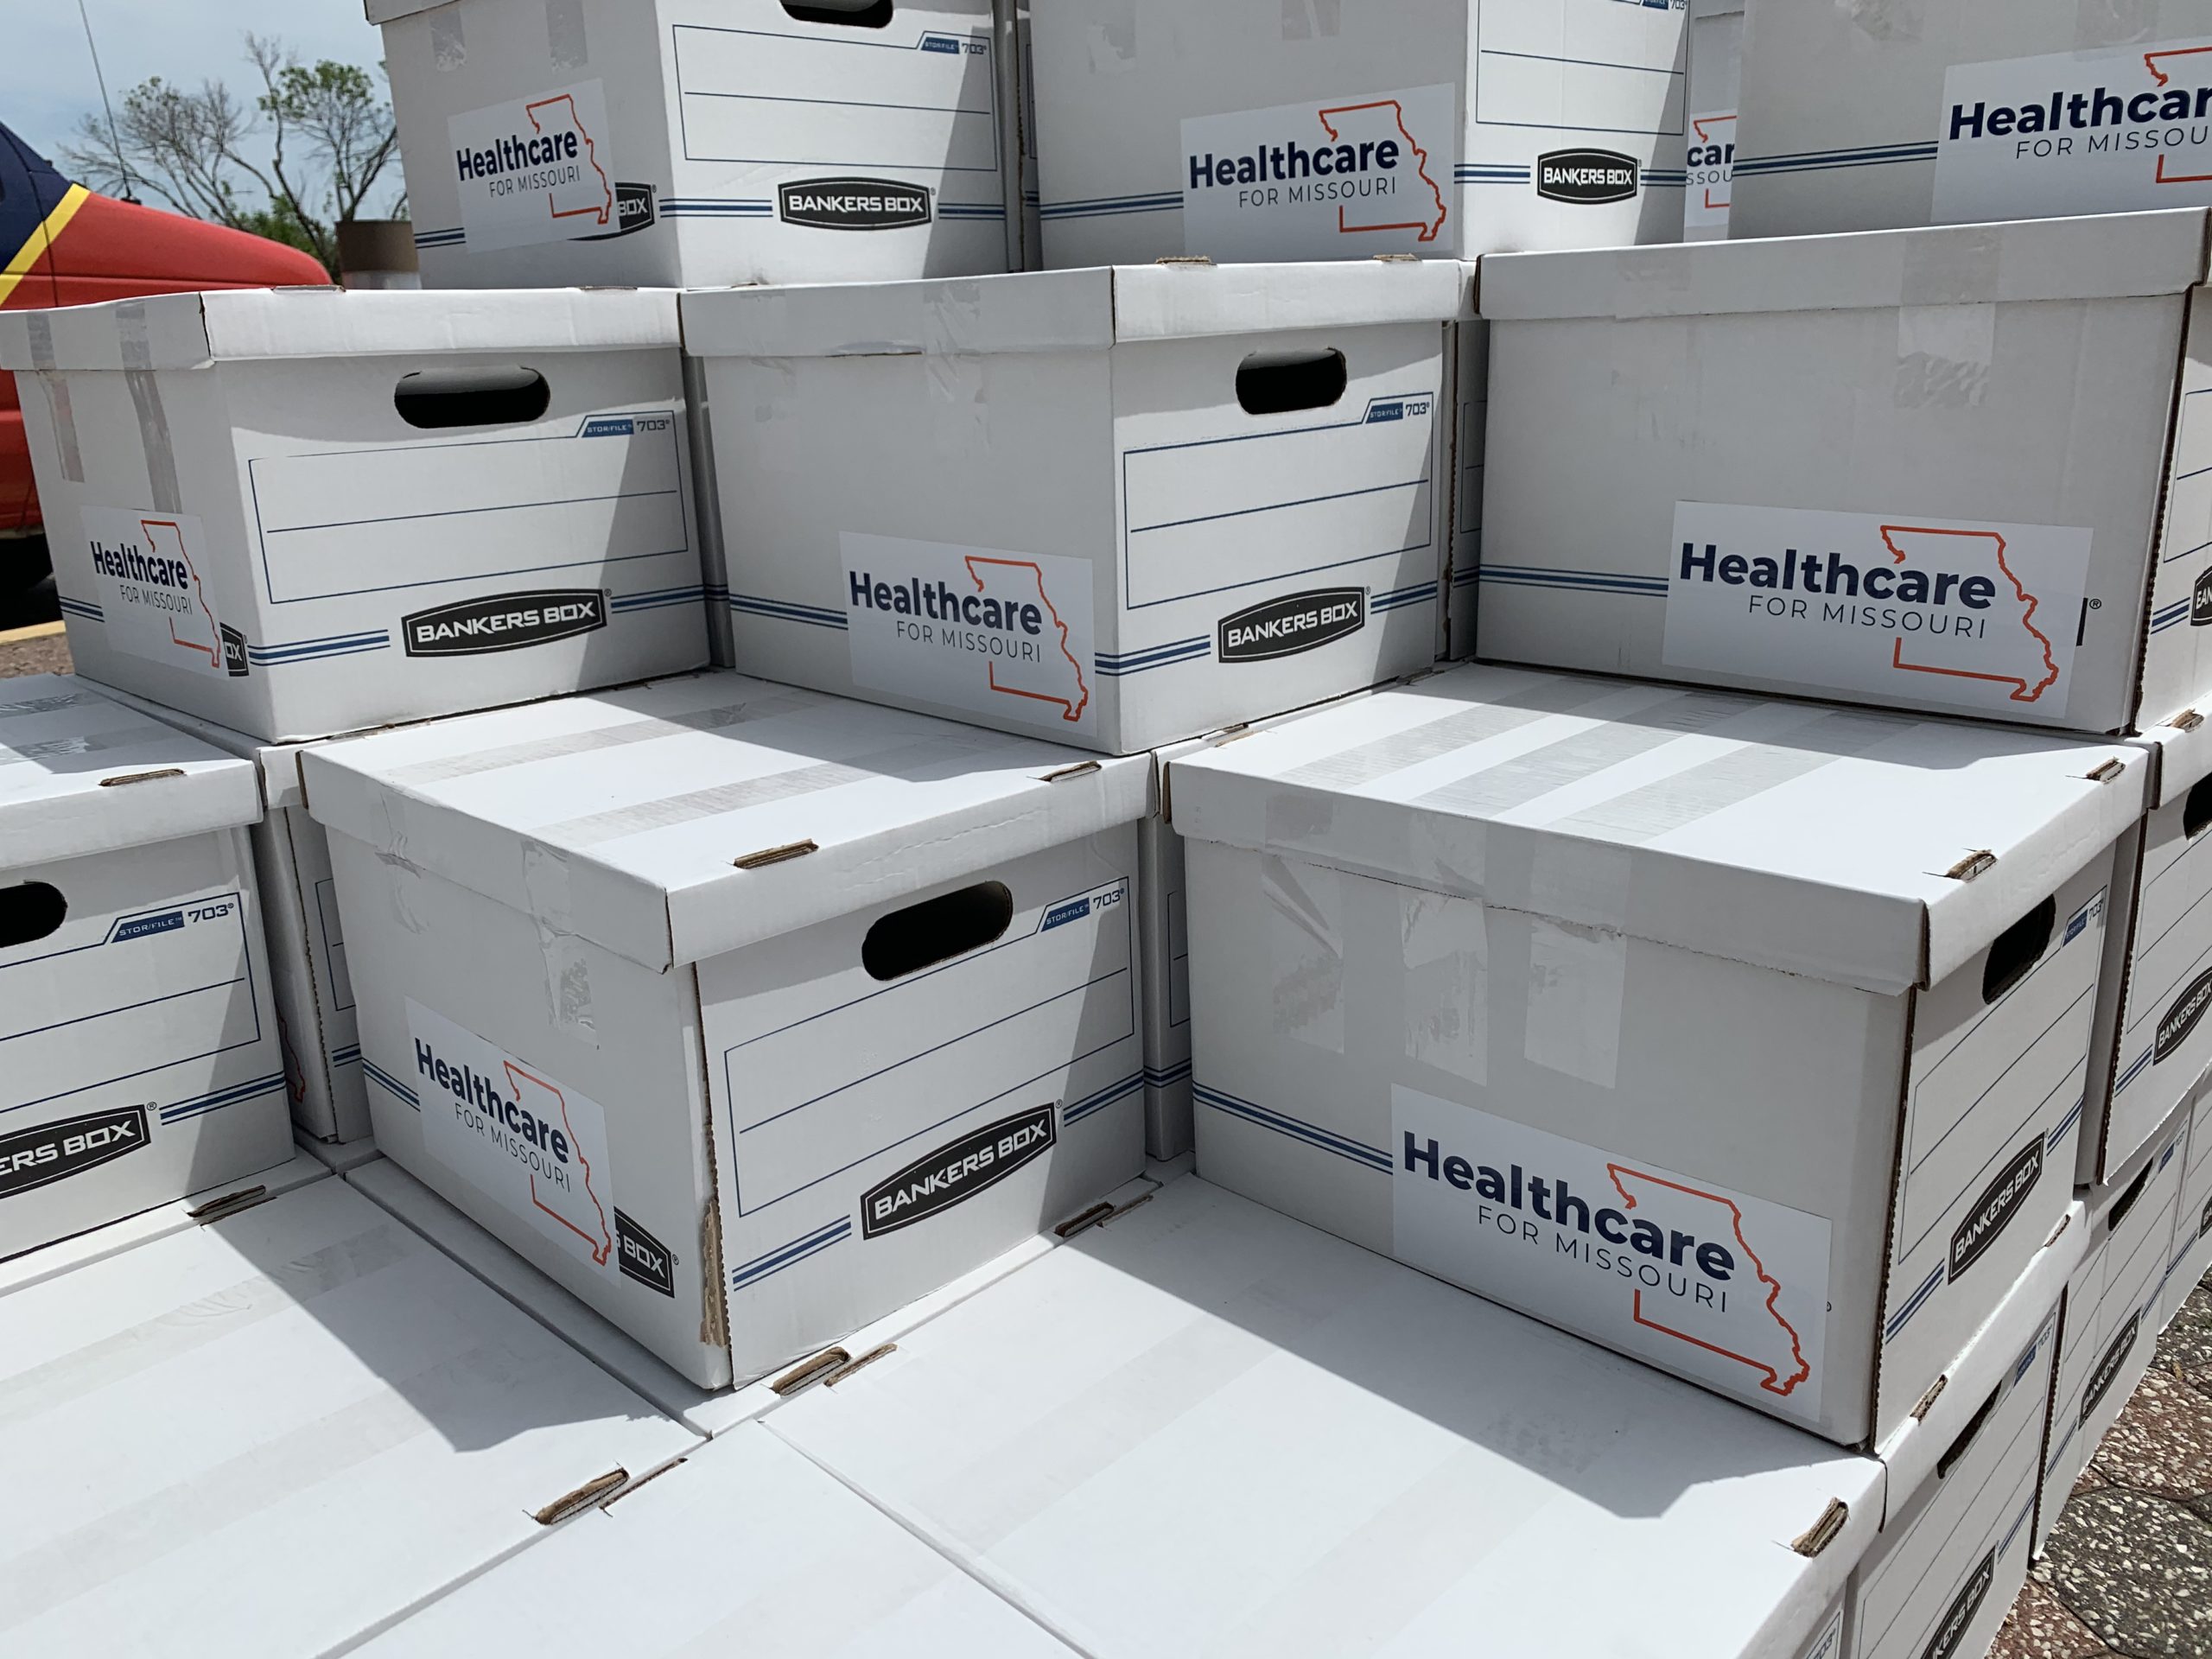 Medicaid boxes